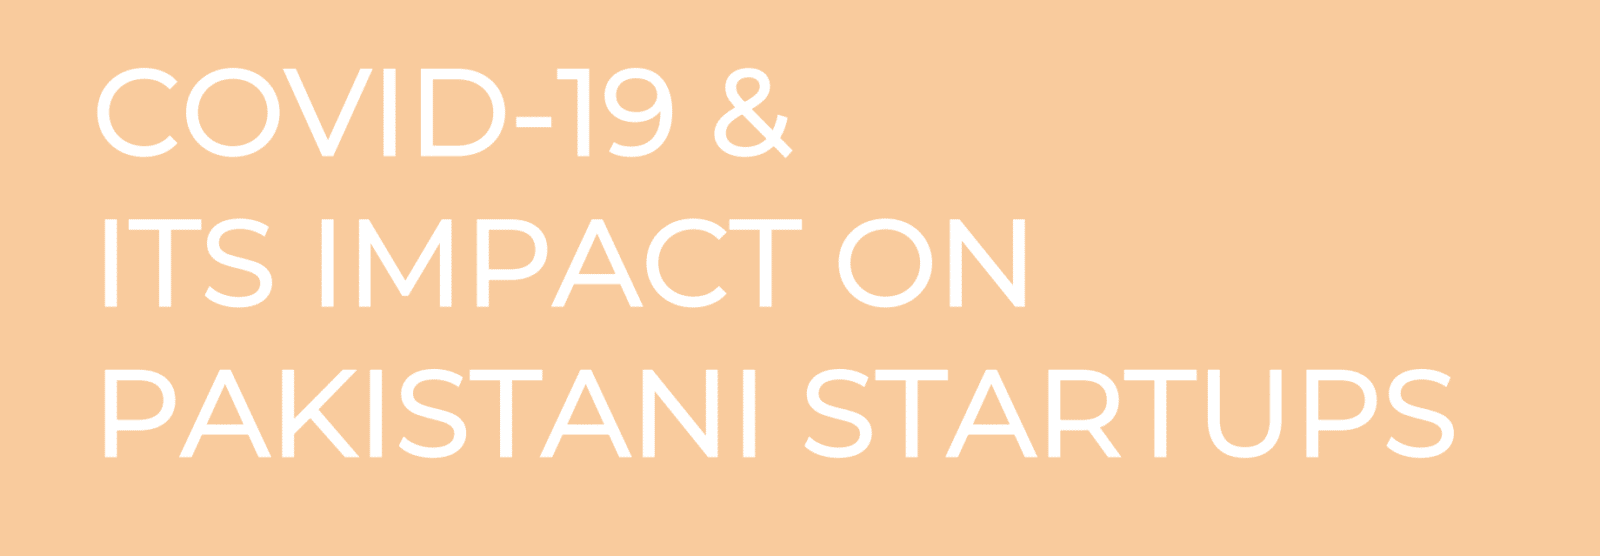 i2i’s Latest Study Measures COVID-19’s Impact on Pakistani Startups